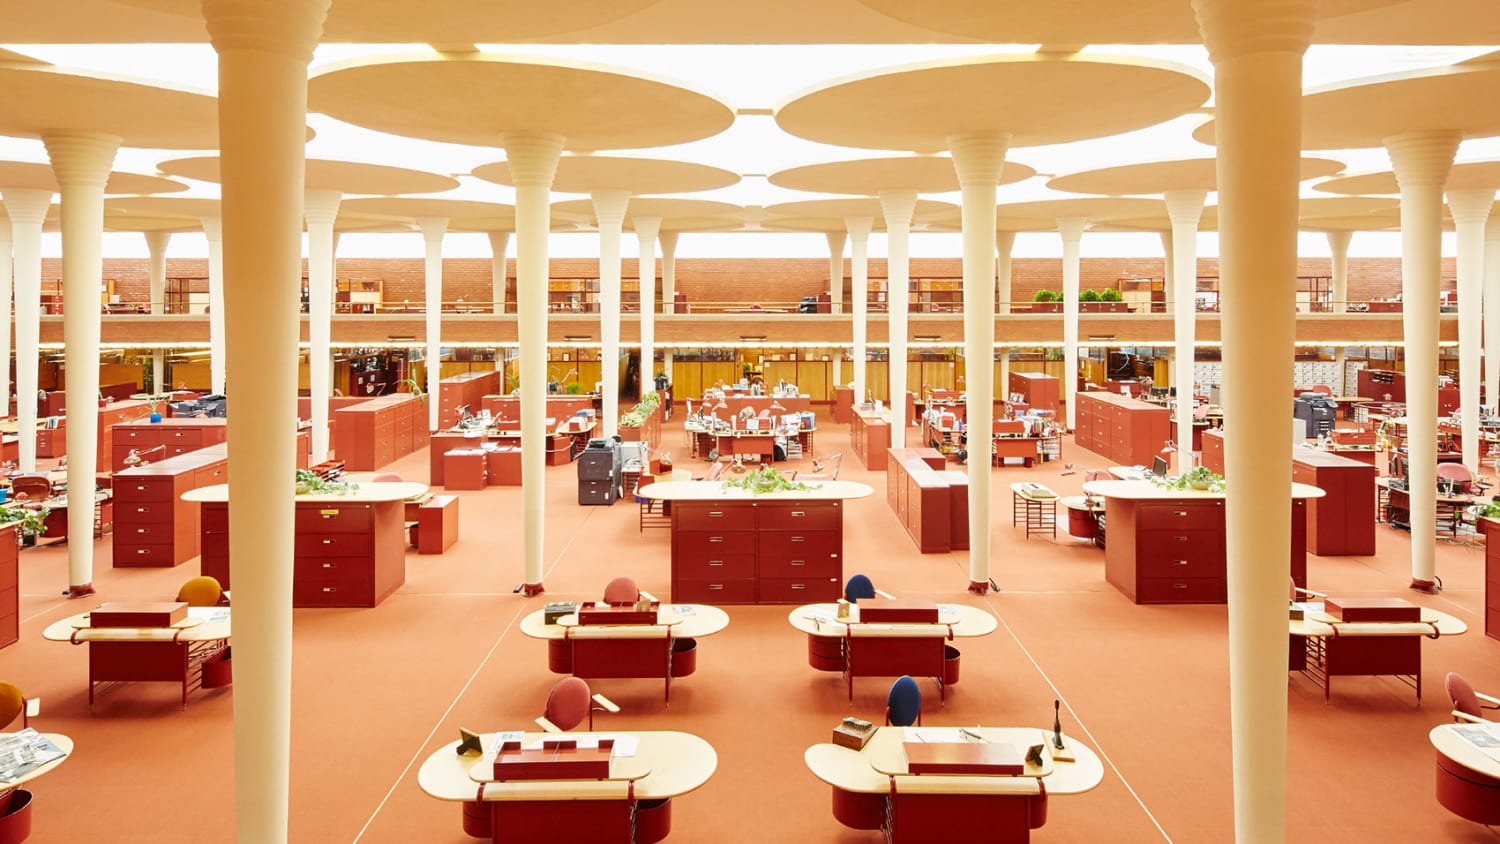 Office designed by Frank Lloyd Wright